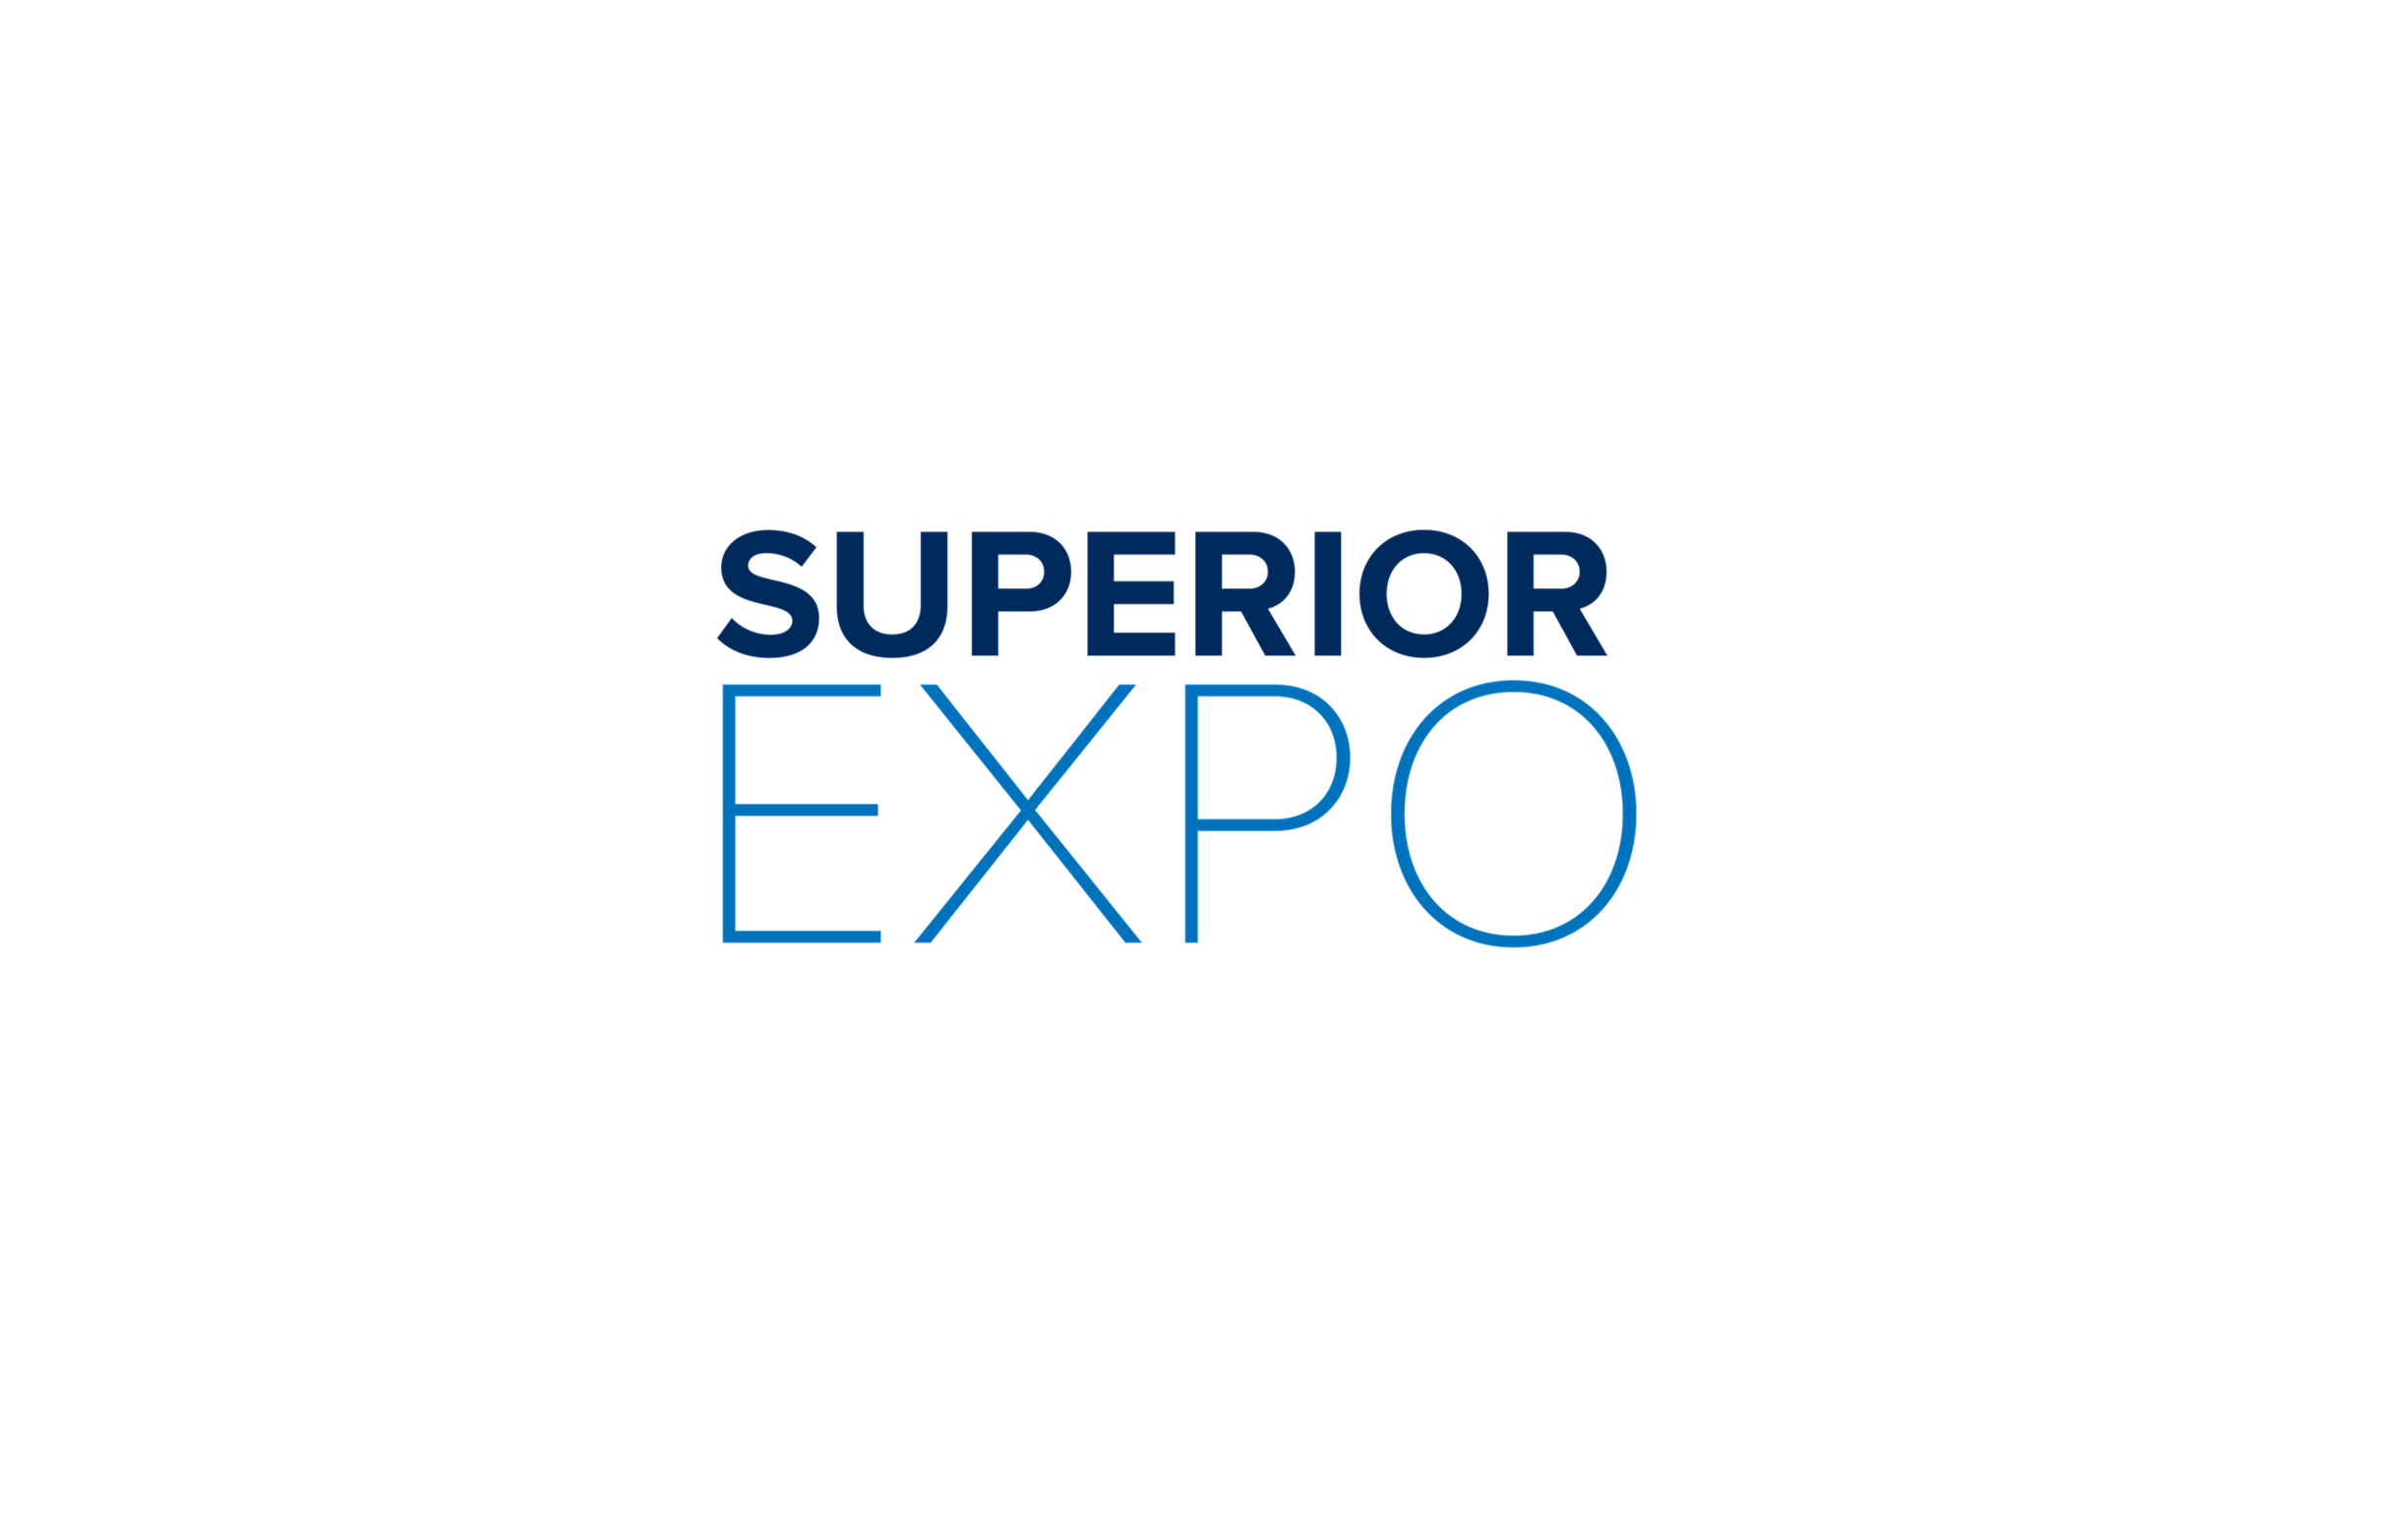 Superior Expo 2019